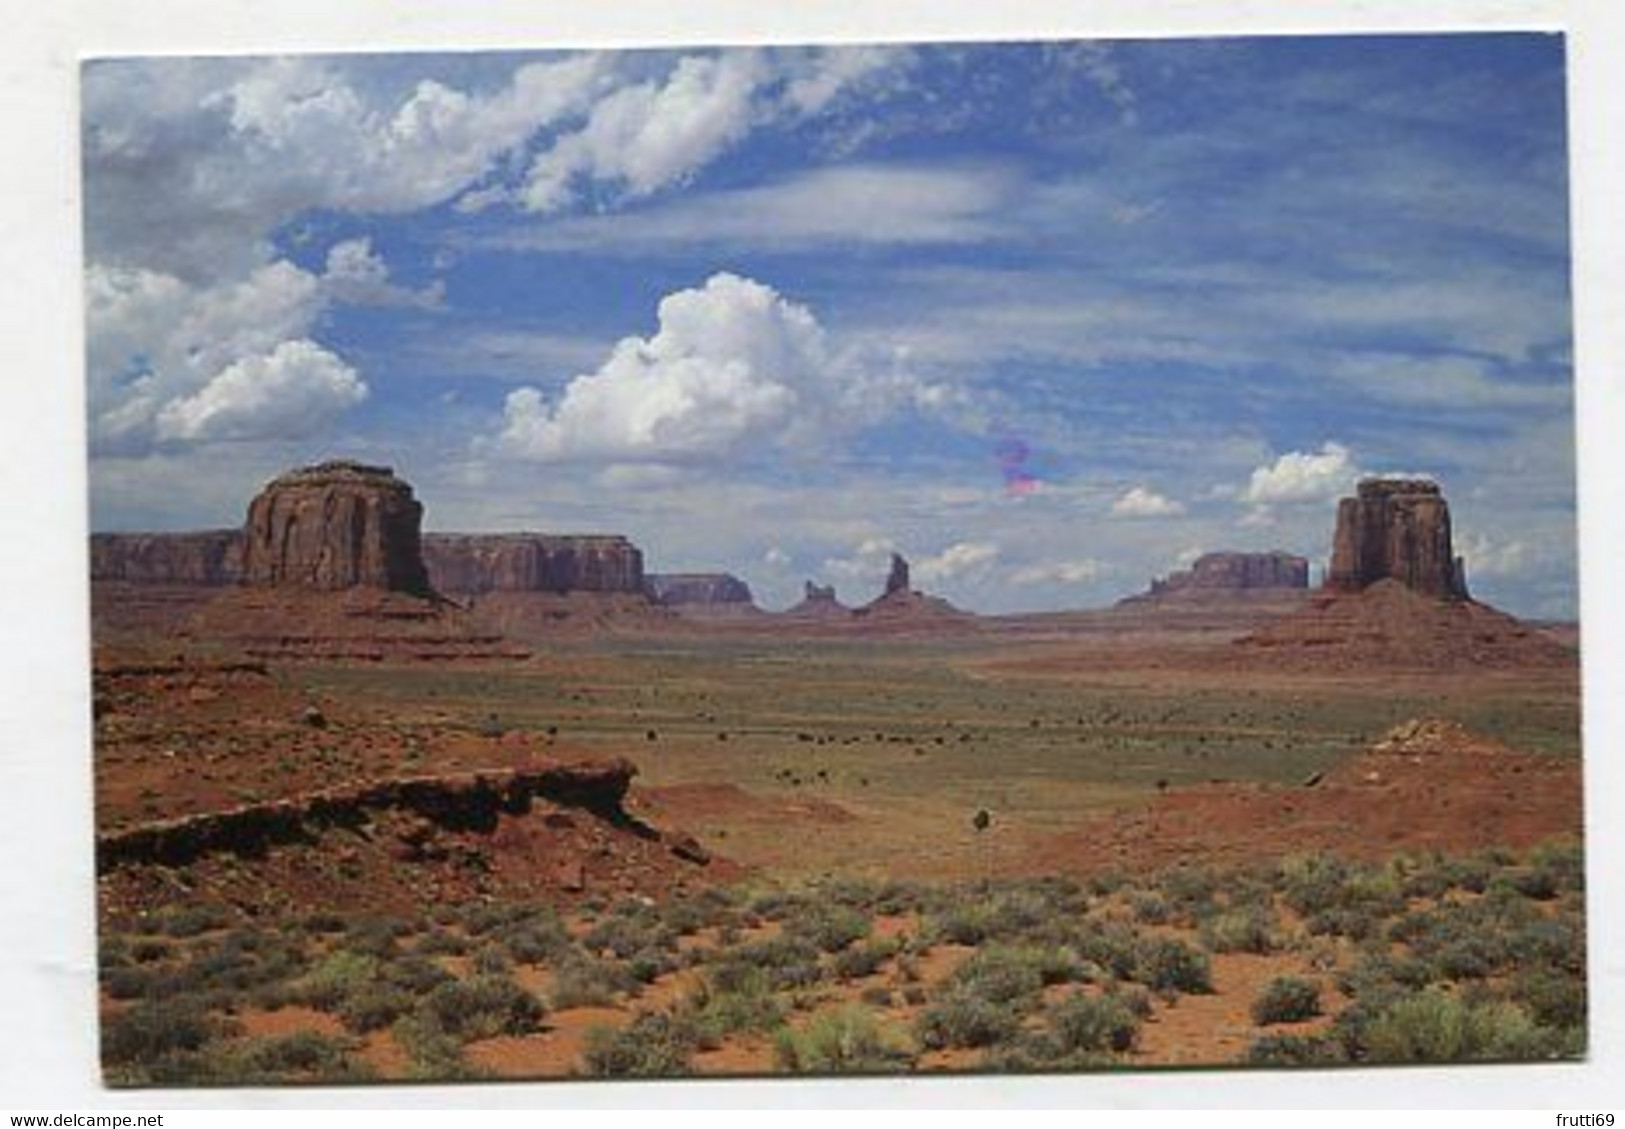 AK 016960 USA - Arizona / Utah - Monument Valley - Artist Point - Monument Valley